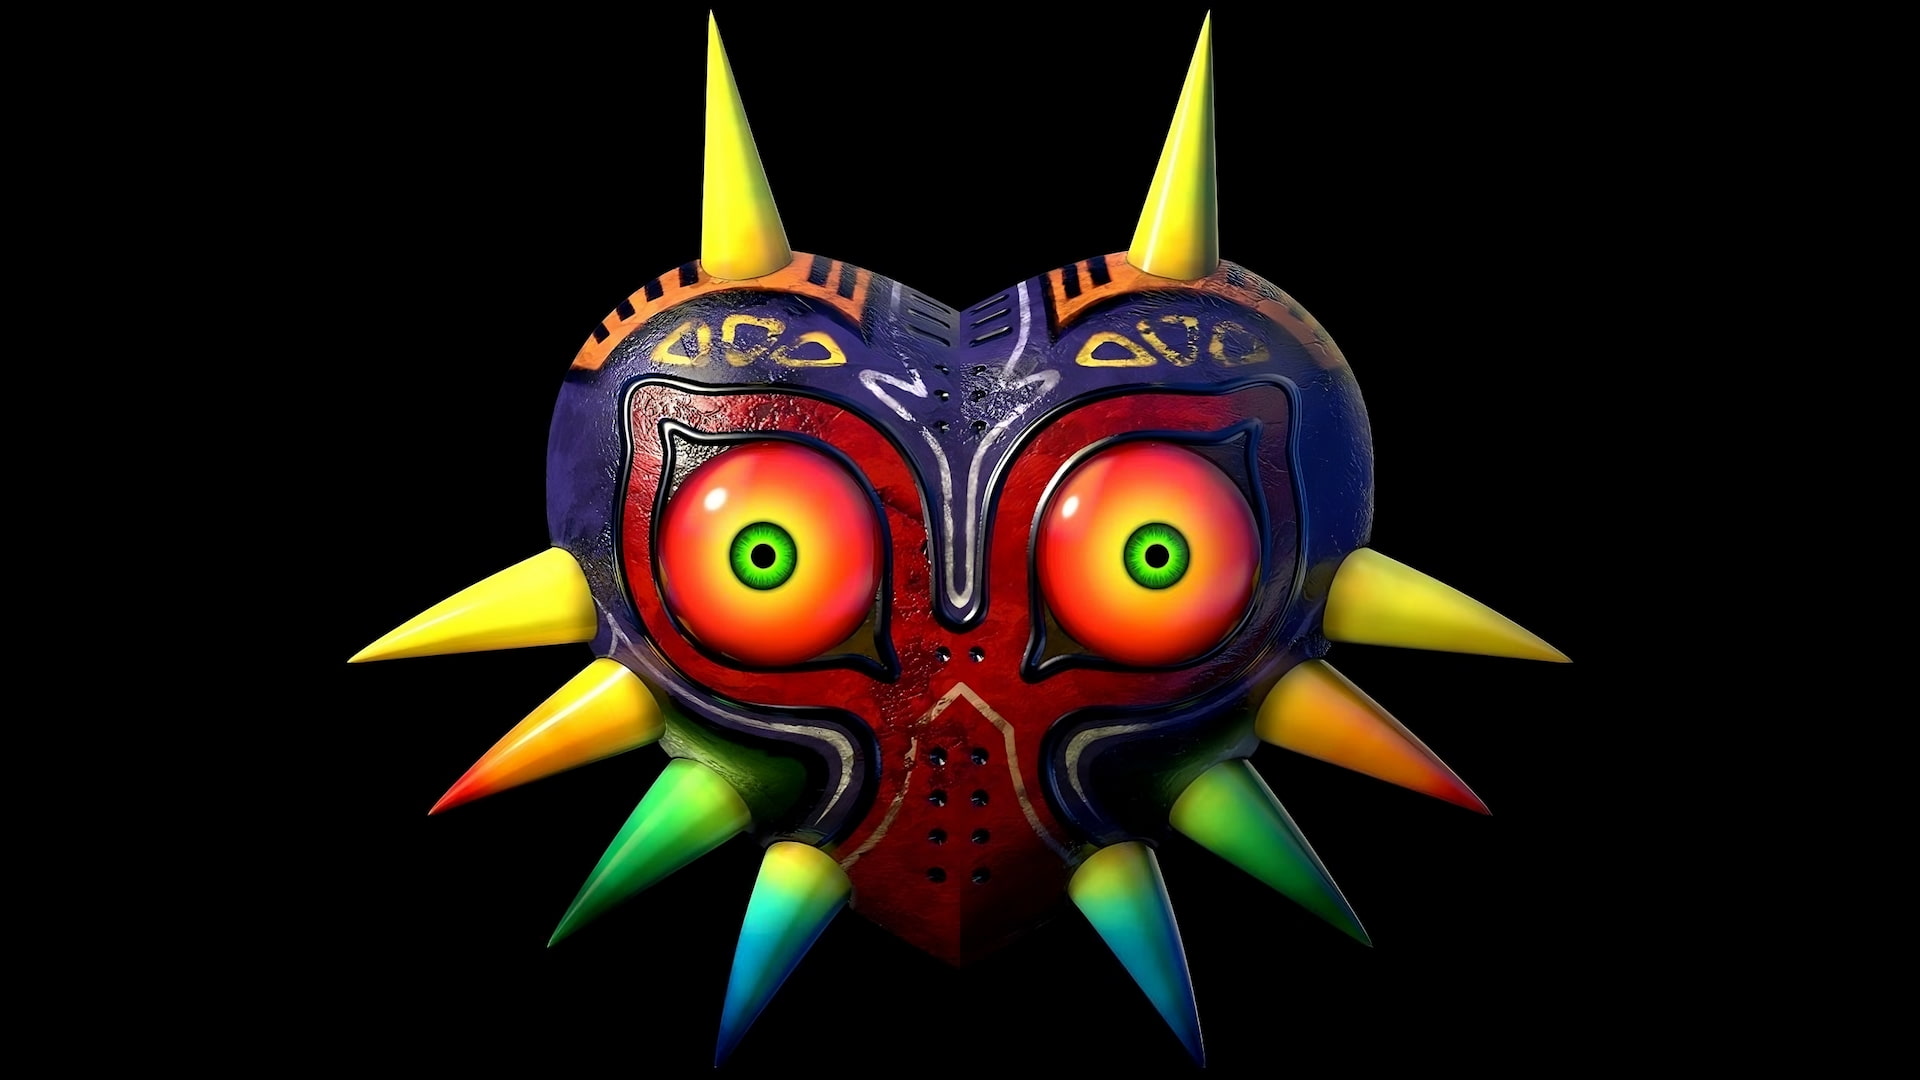 Zelda Majora's Mask